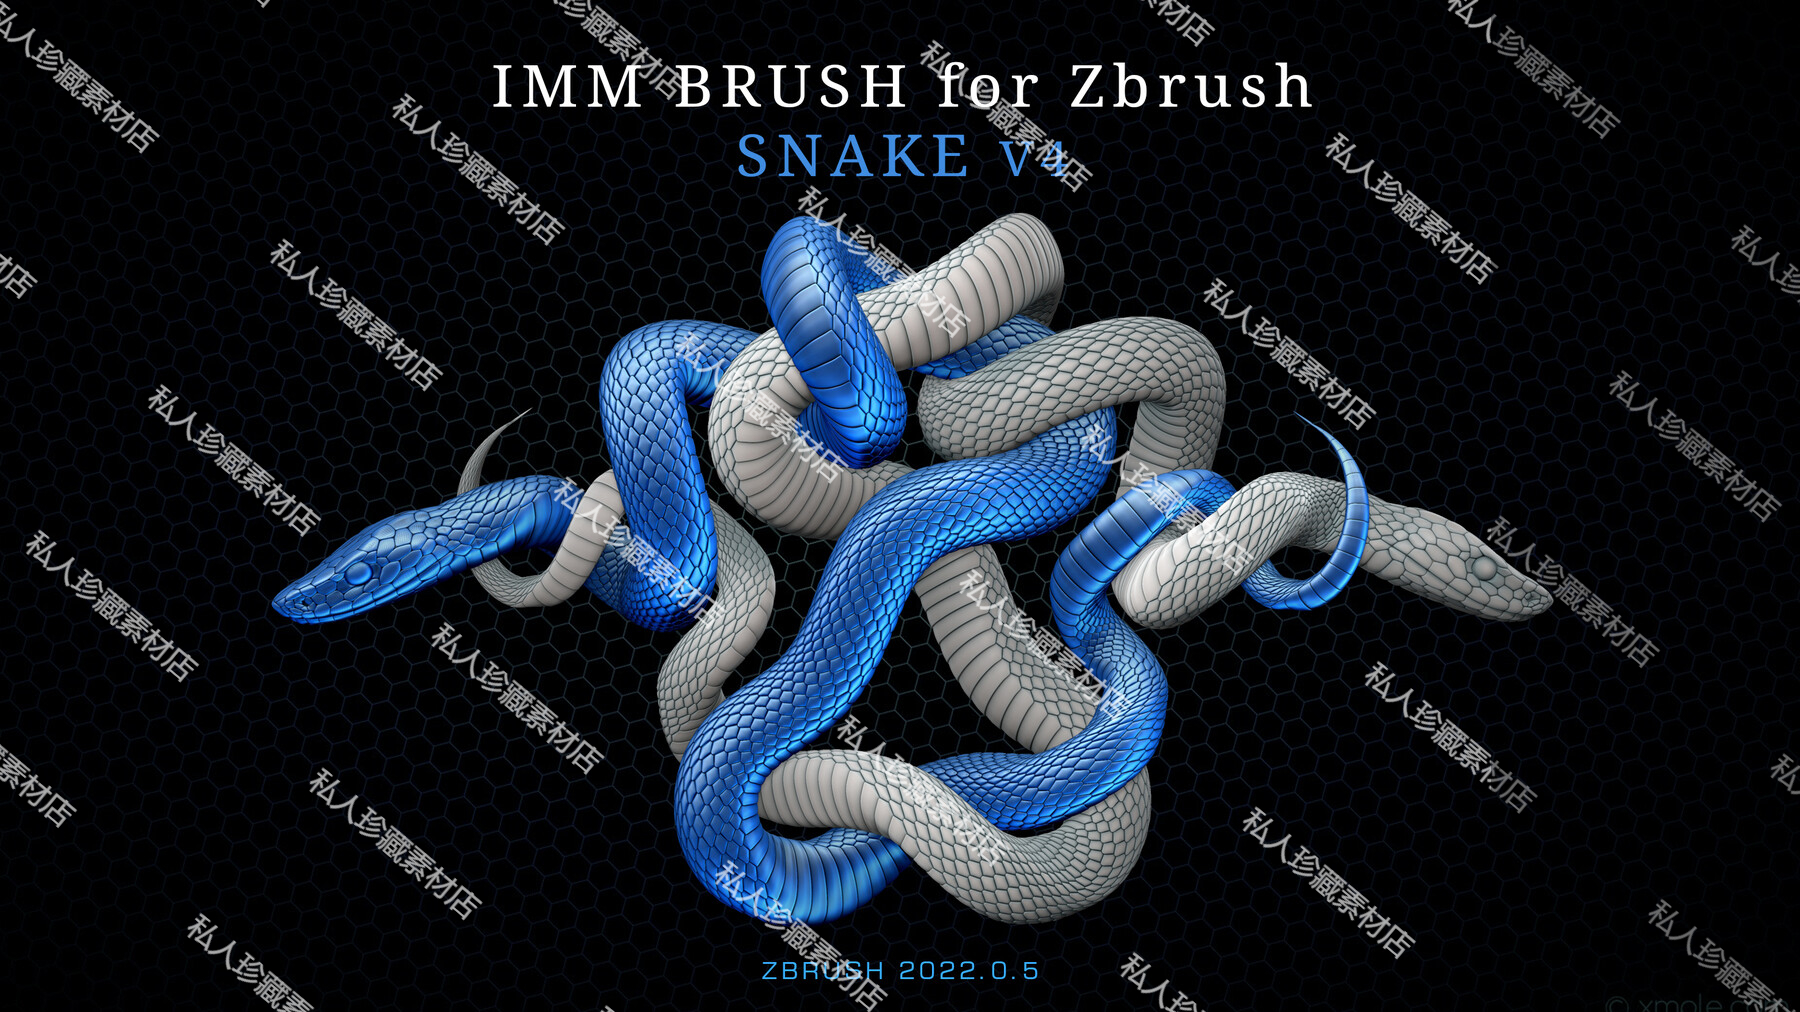 zbrush蛇头蛇身曲线IMM笔刷 蝰蛇爬行动物毒蛇形状3d模型zb画笔